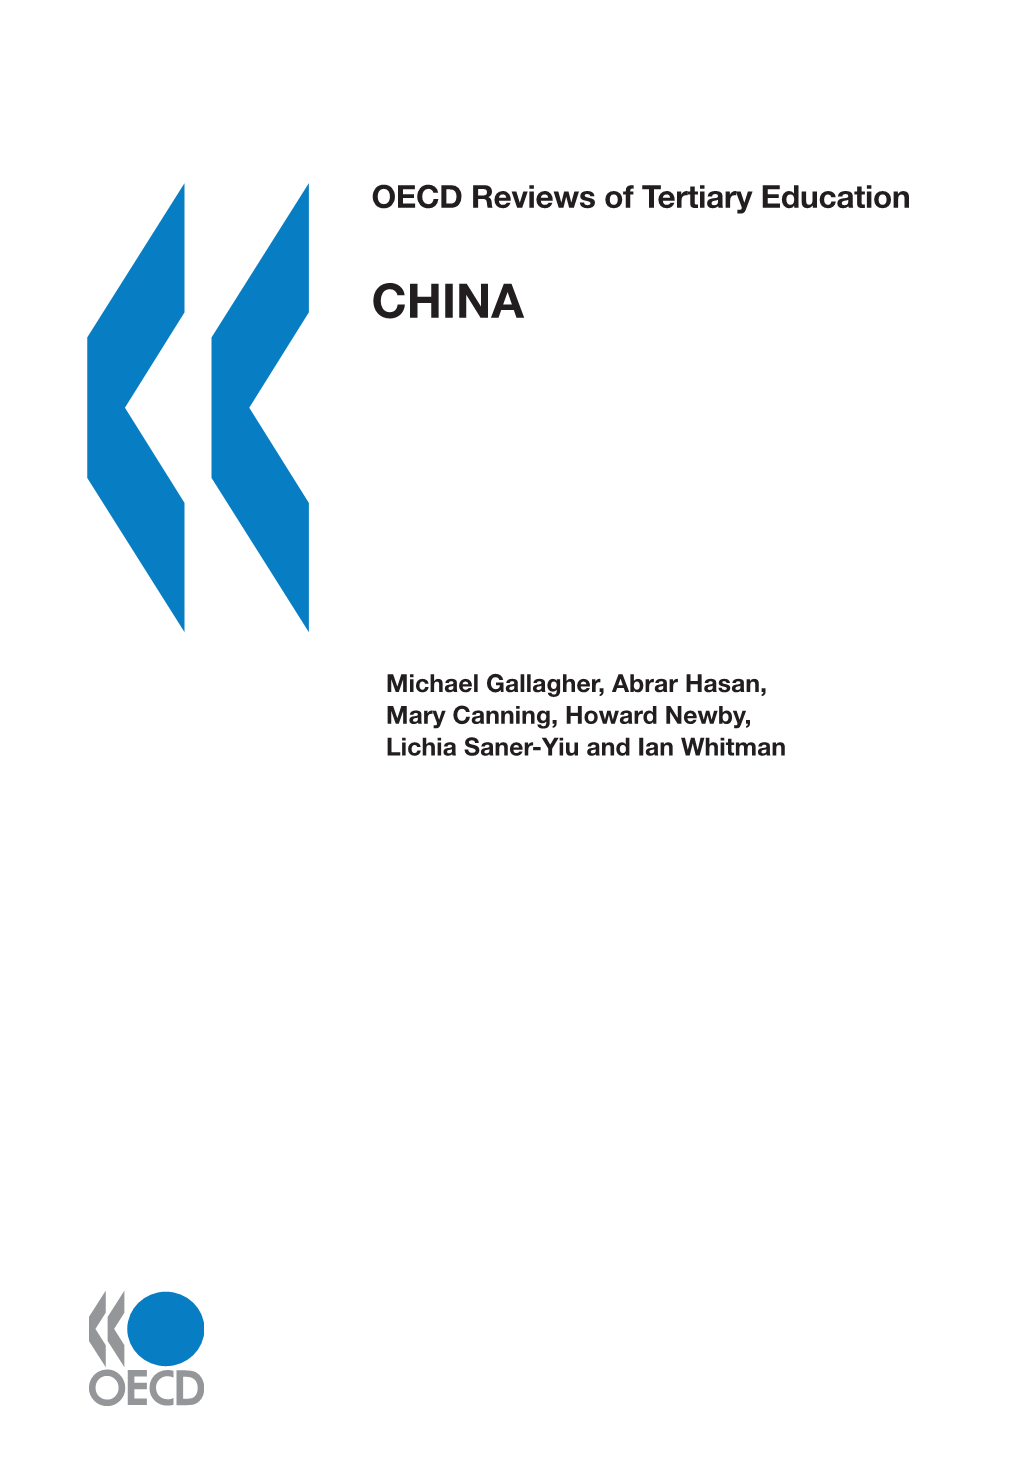 OECD Reviews of Tertiary Education: China